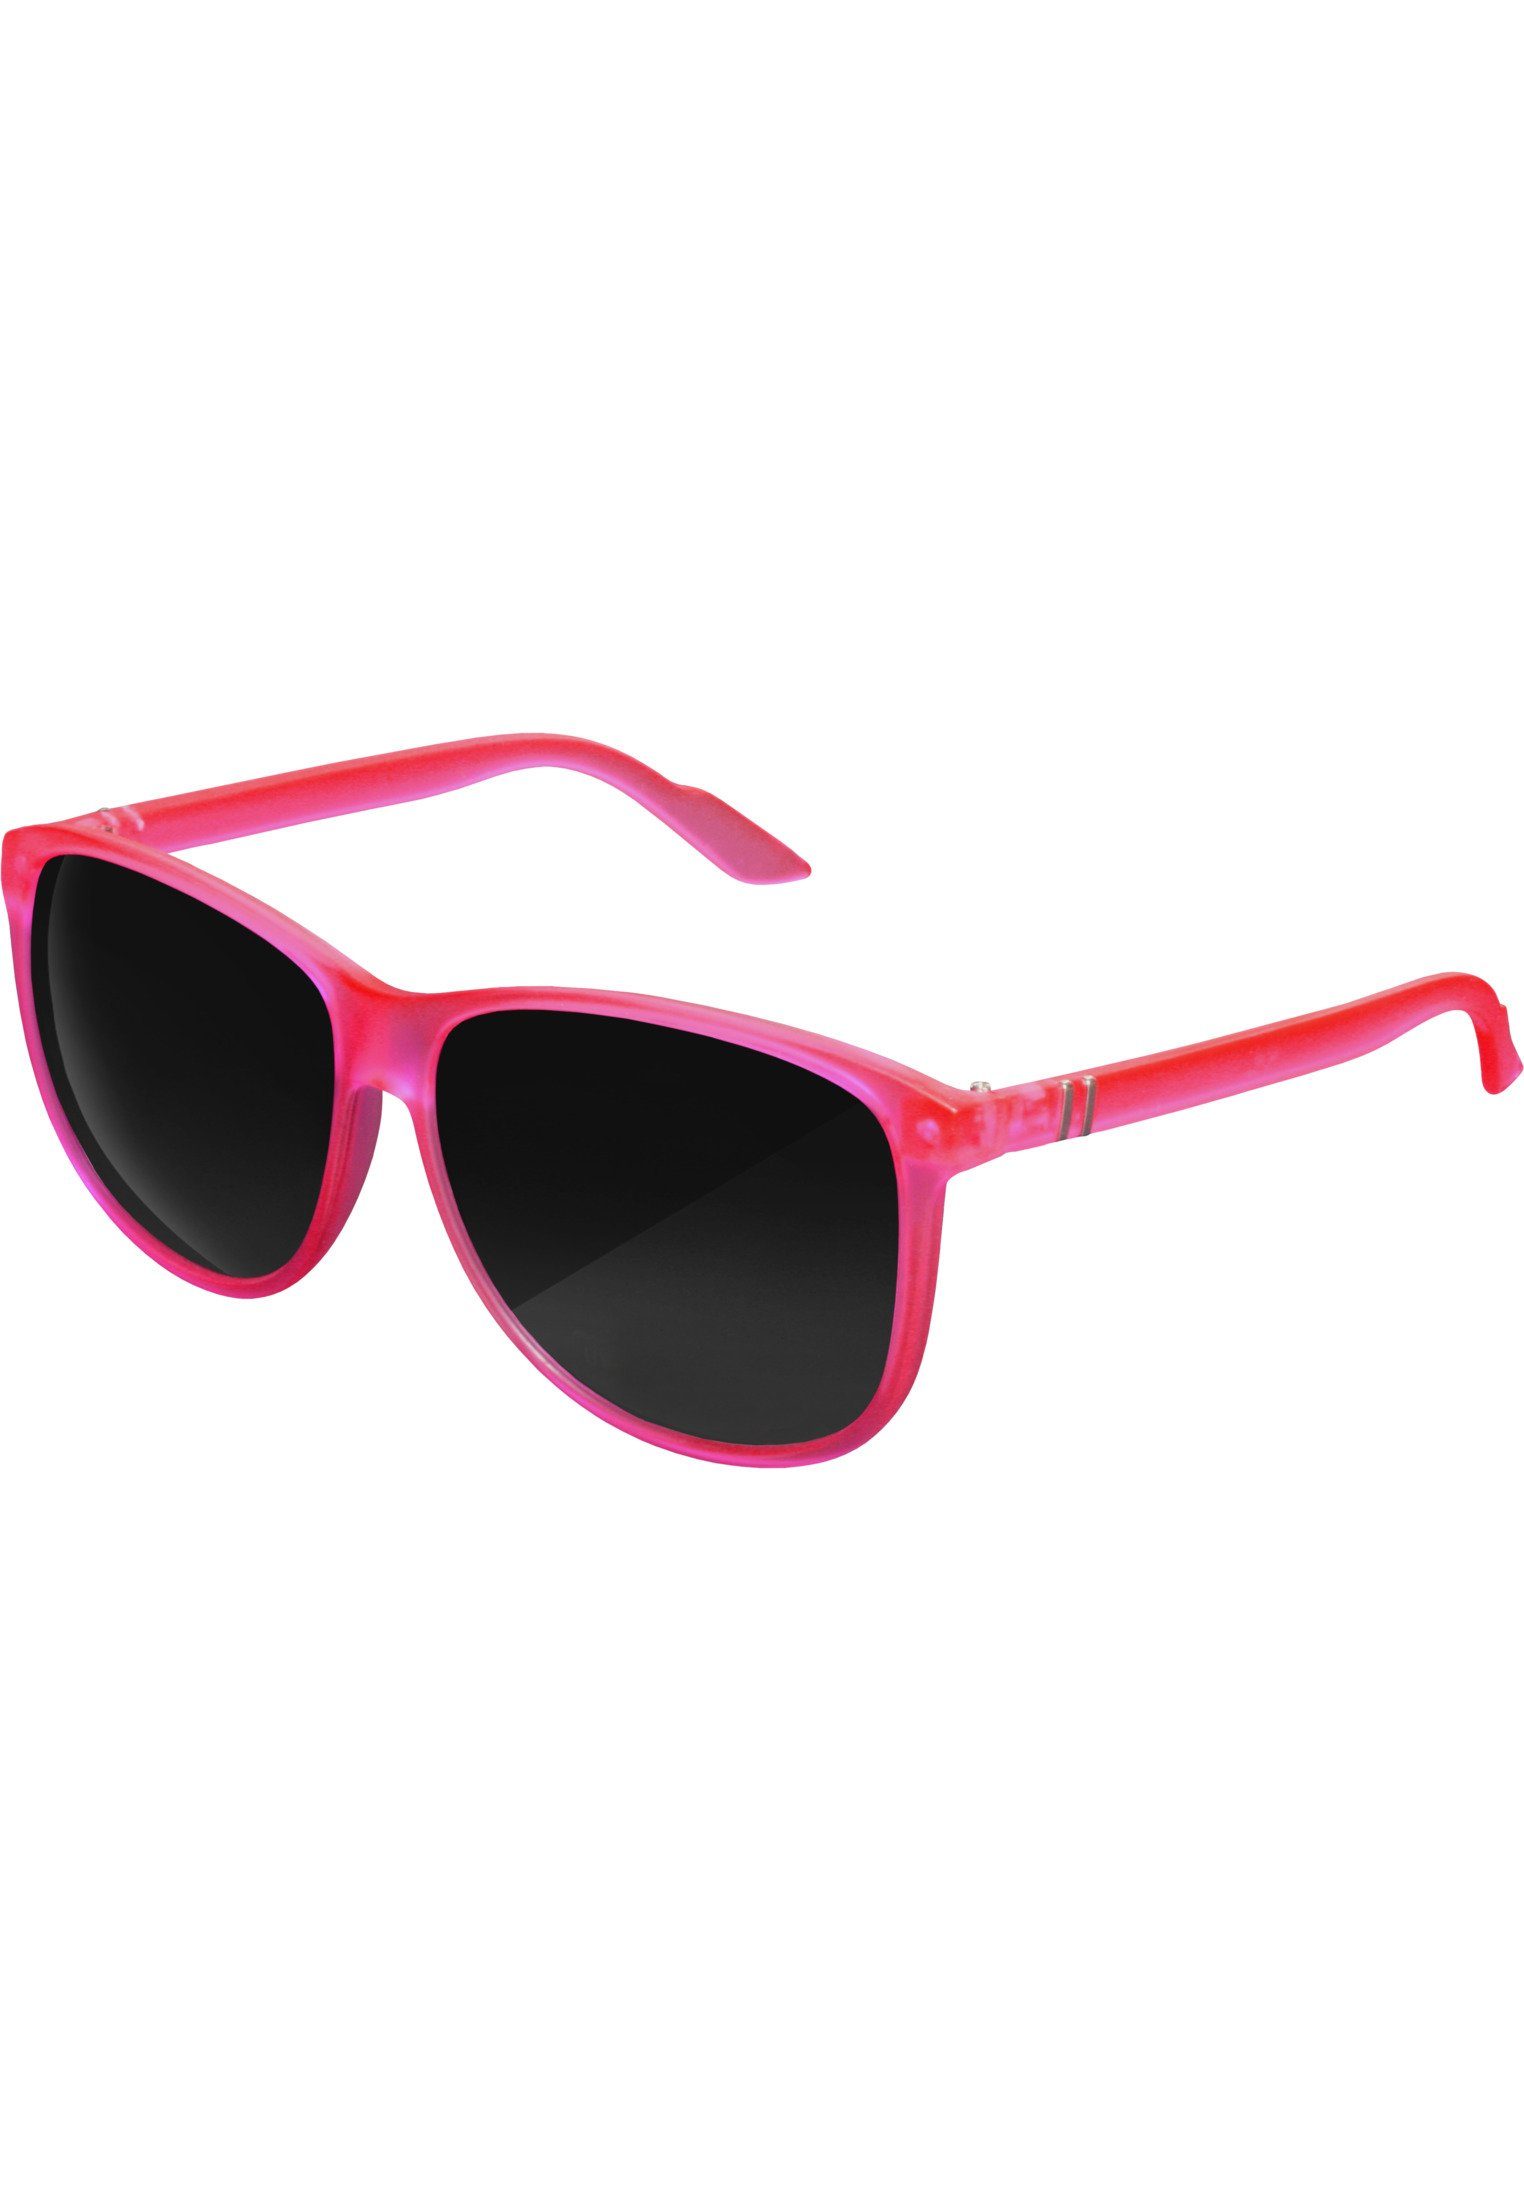 Accessoires MSTRDS Sonnenbrille Sunglasses Chirwa neonpink